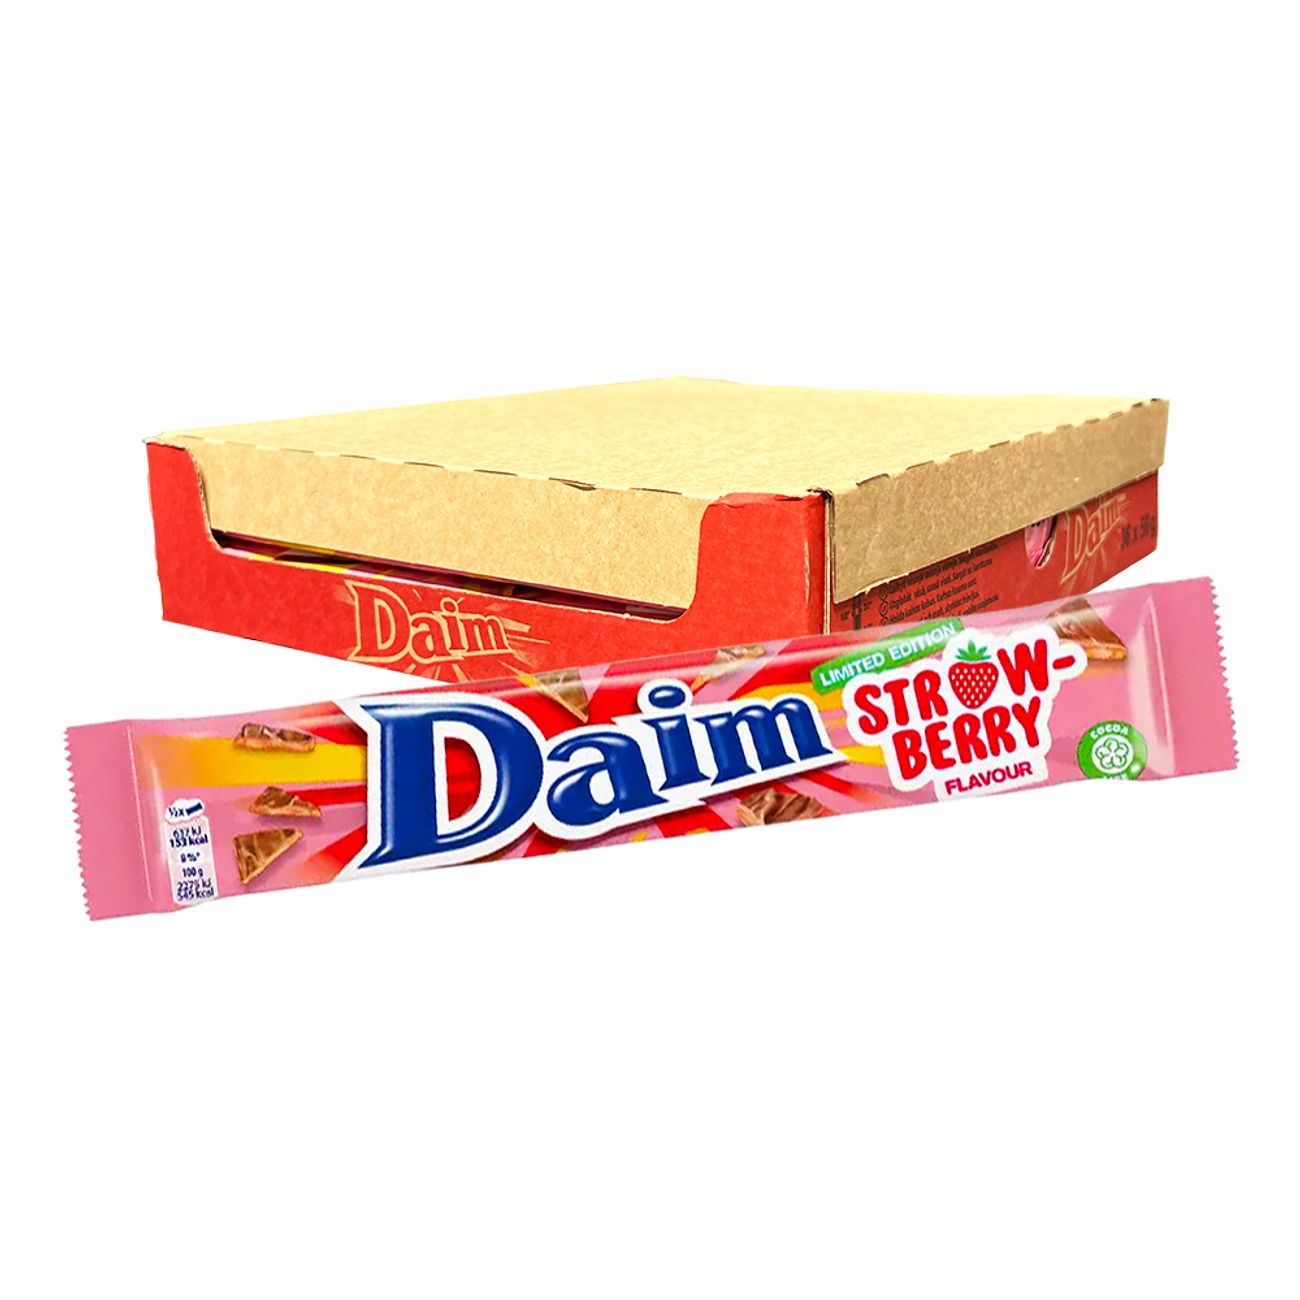 dubbel-daim-strawberry-storpack-102970-1